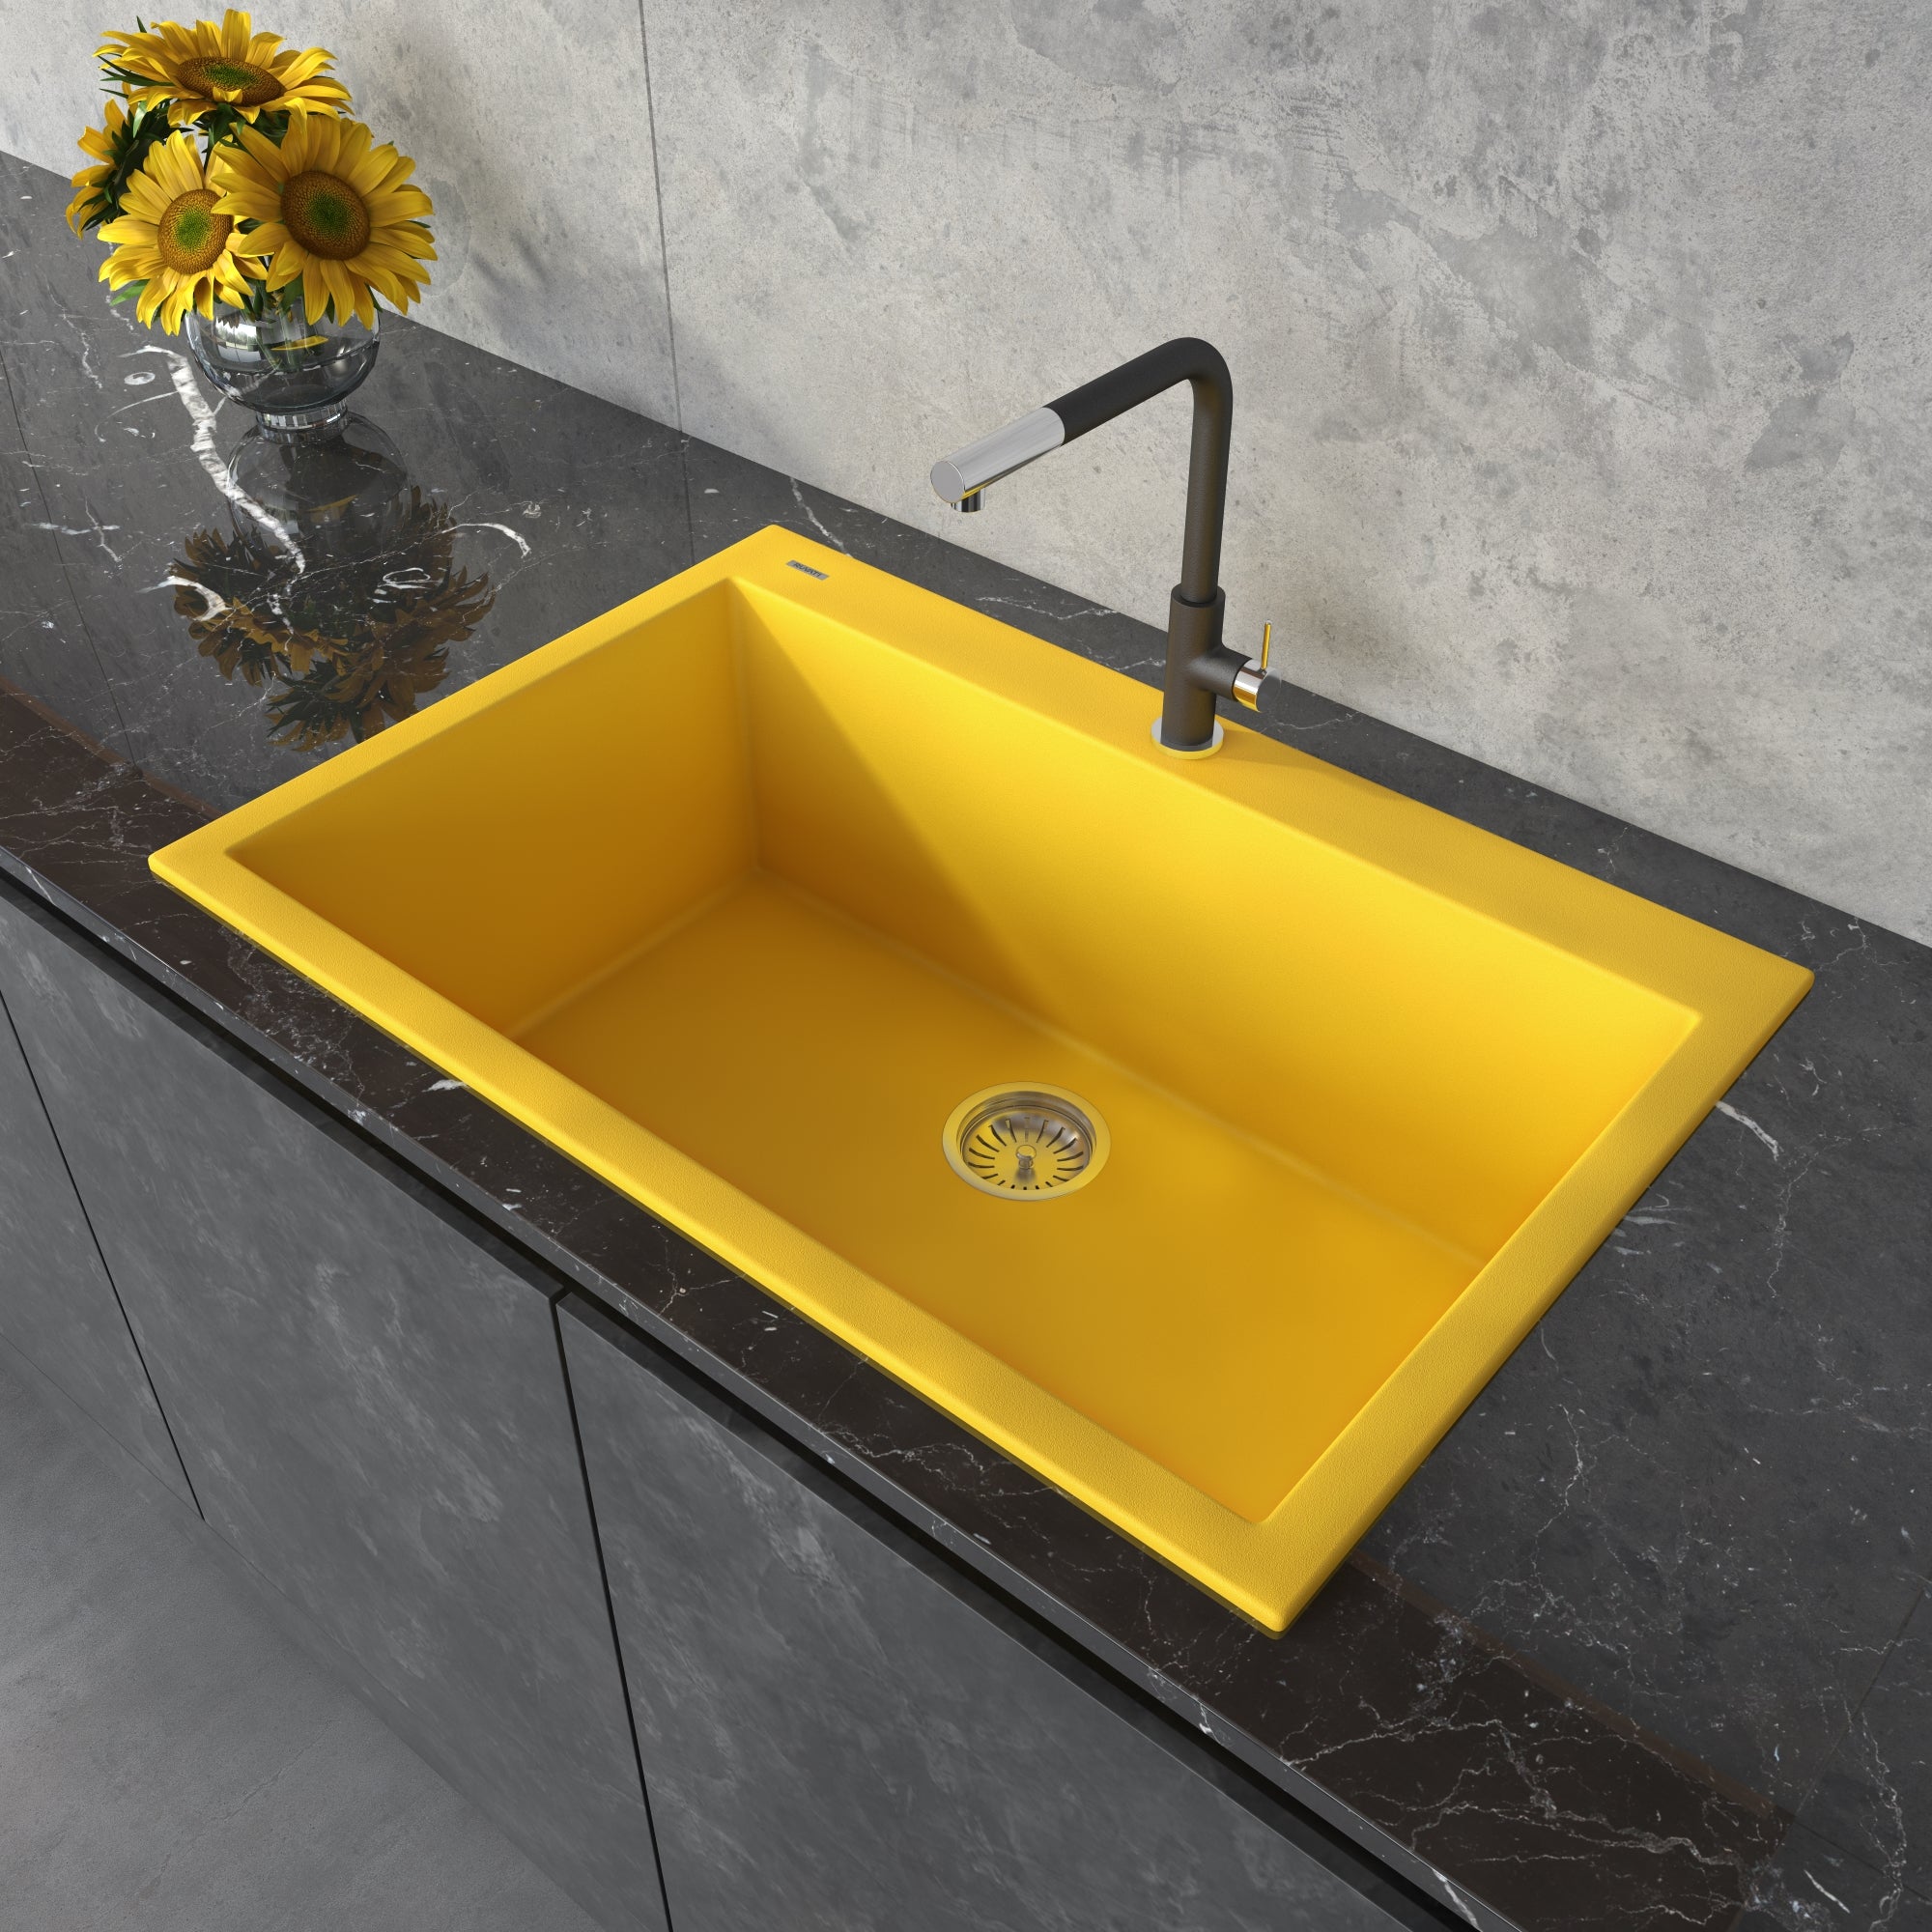 33 x 22 inch Granite Composite Drop-in Topmount Kitchen Sink Single Bowl – Midas Yellow